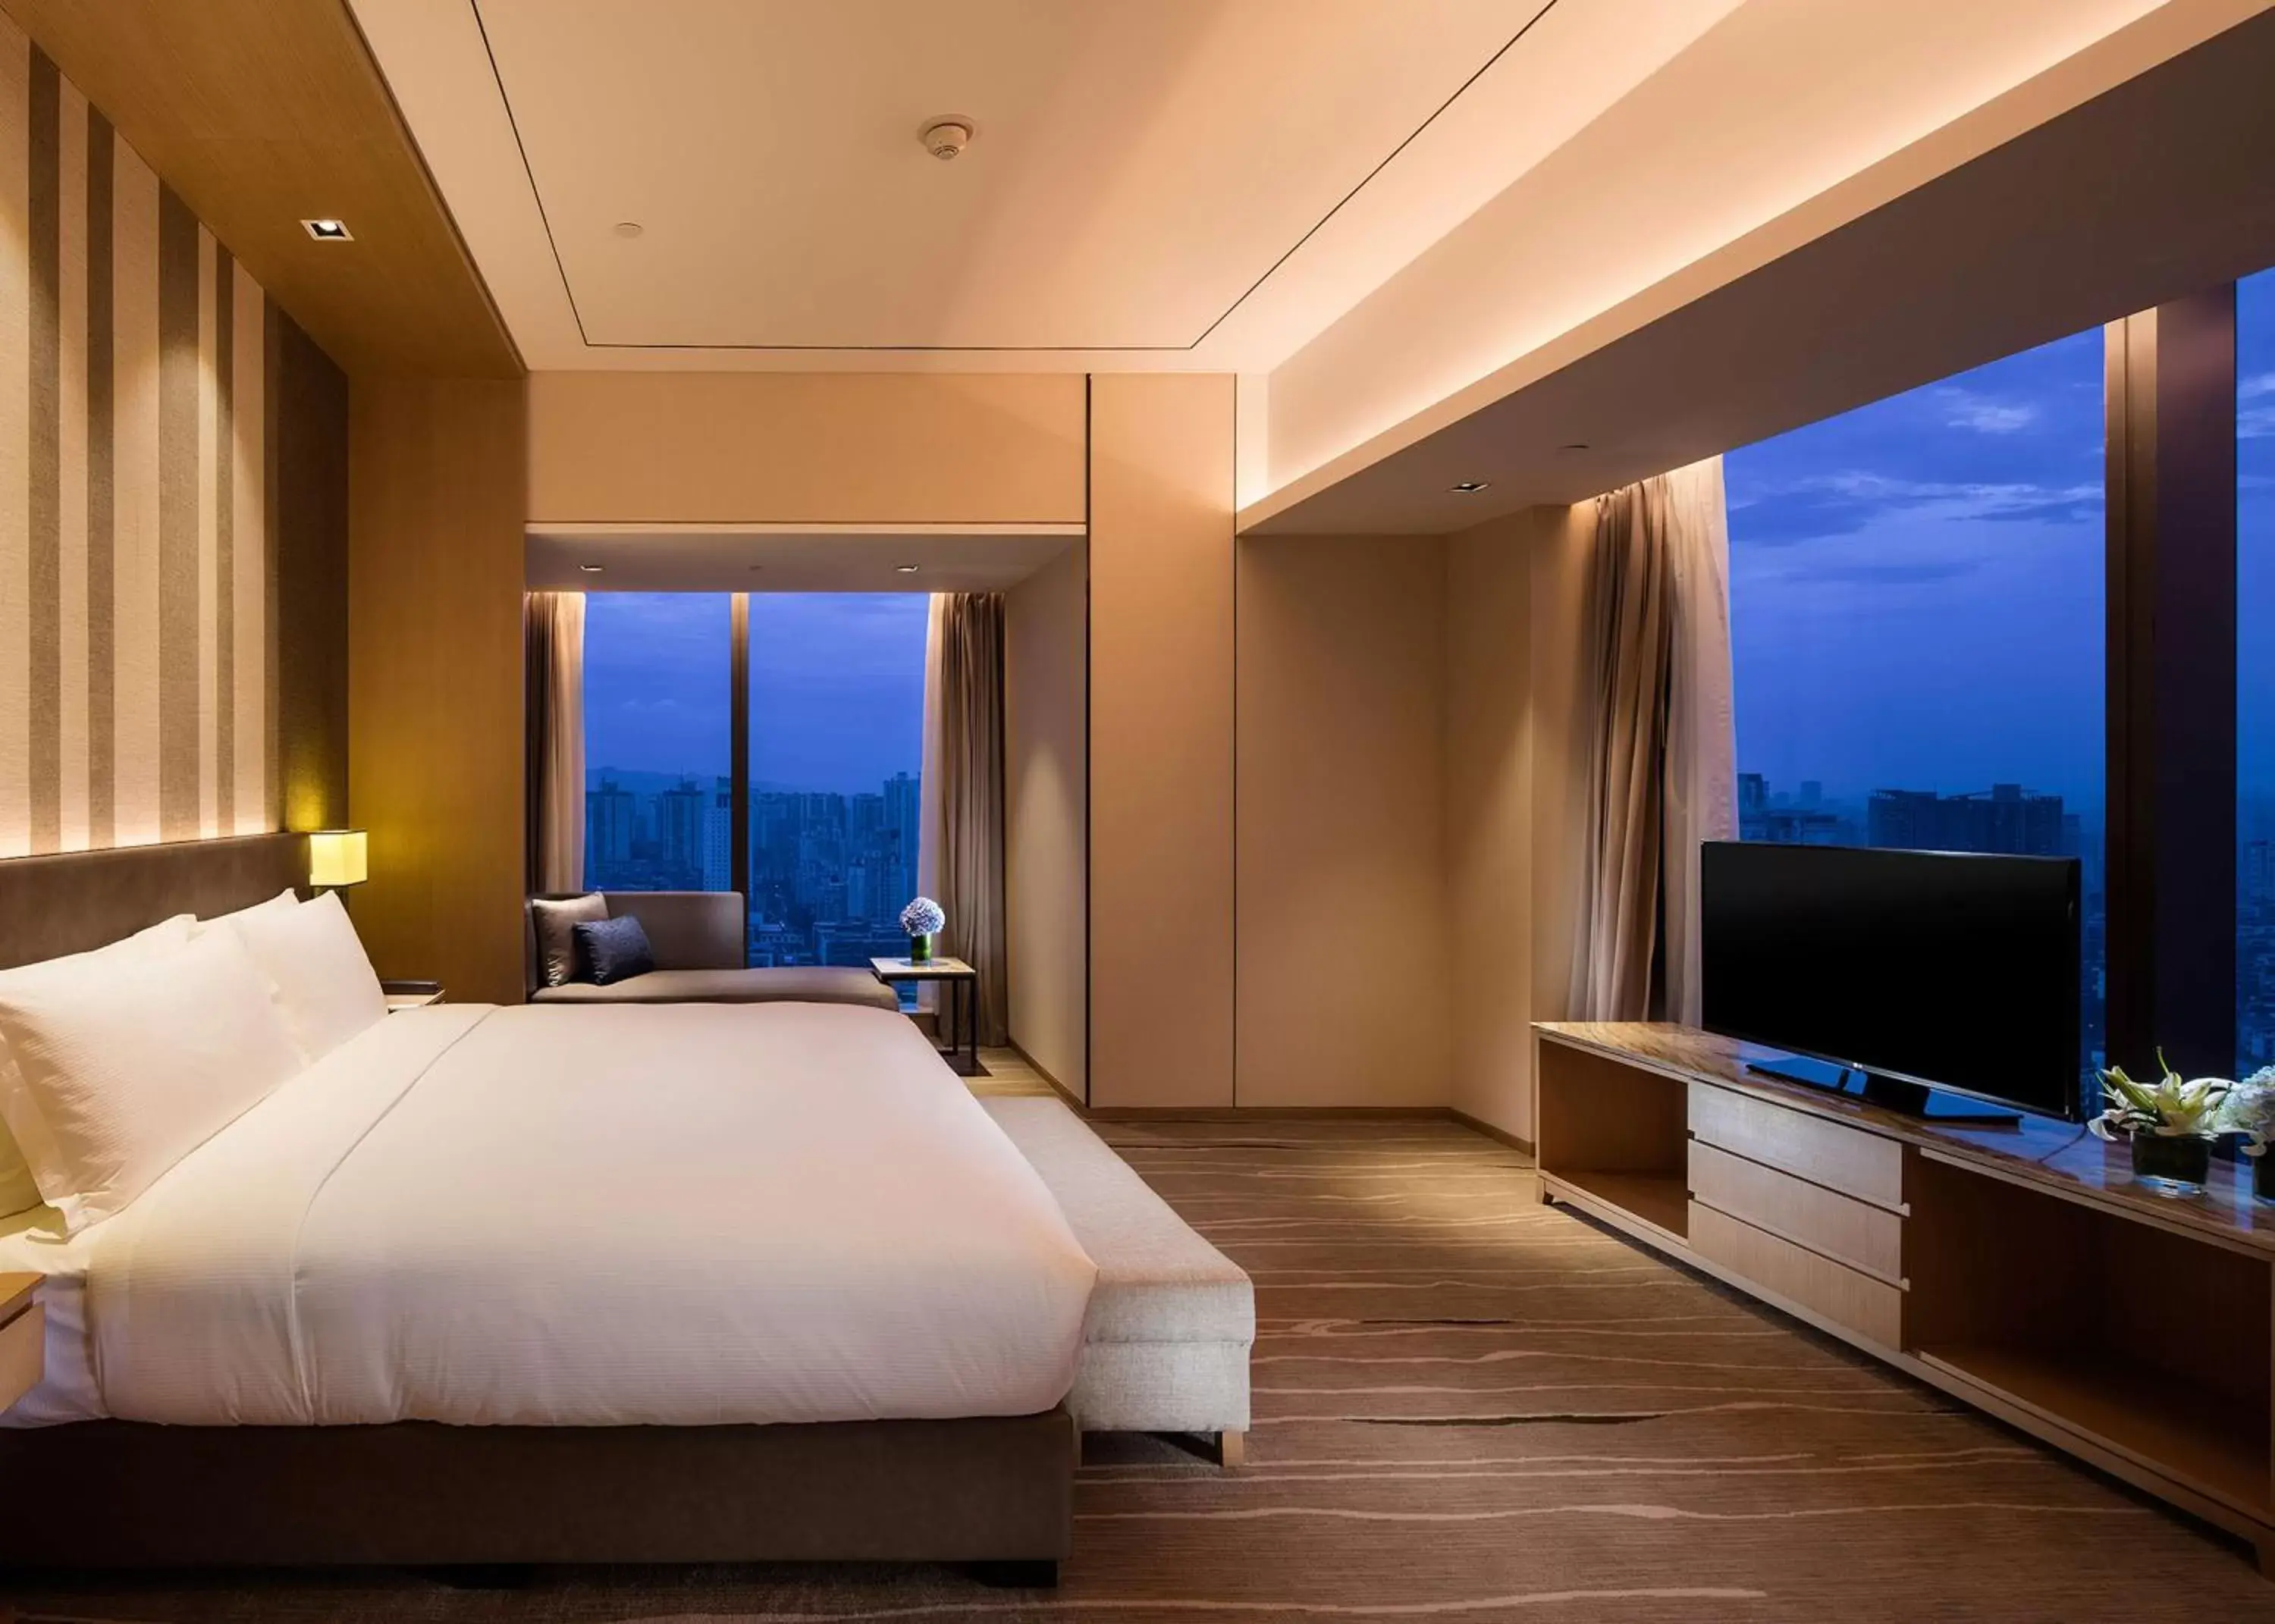 Bedroom, Sunrise/Sunset in DoubleTree by Hilton Chongqing - Nan'an